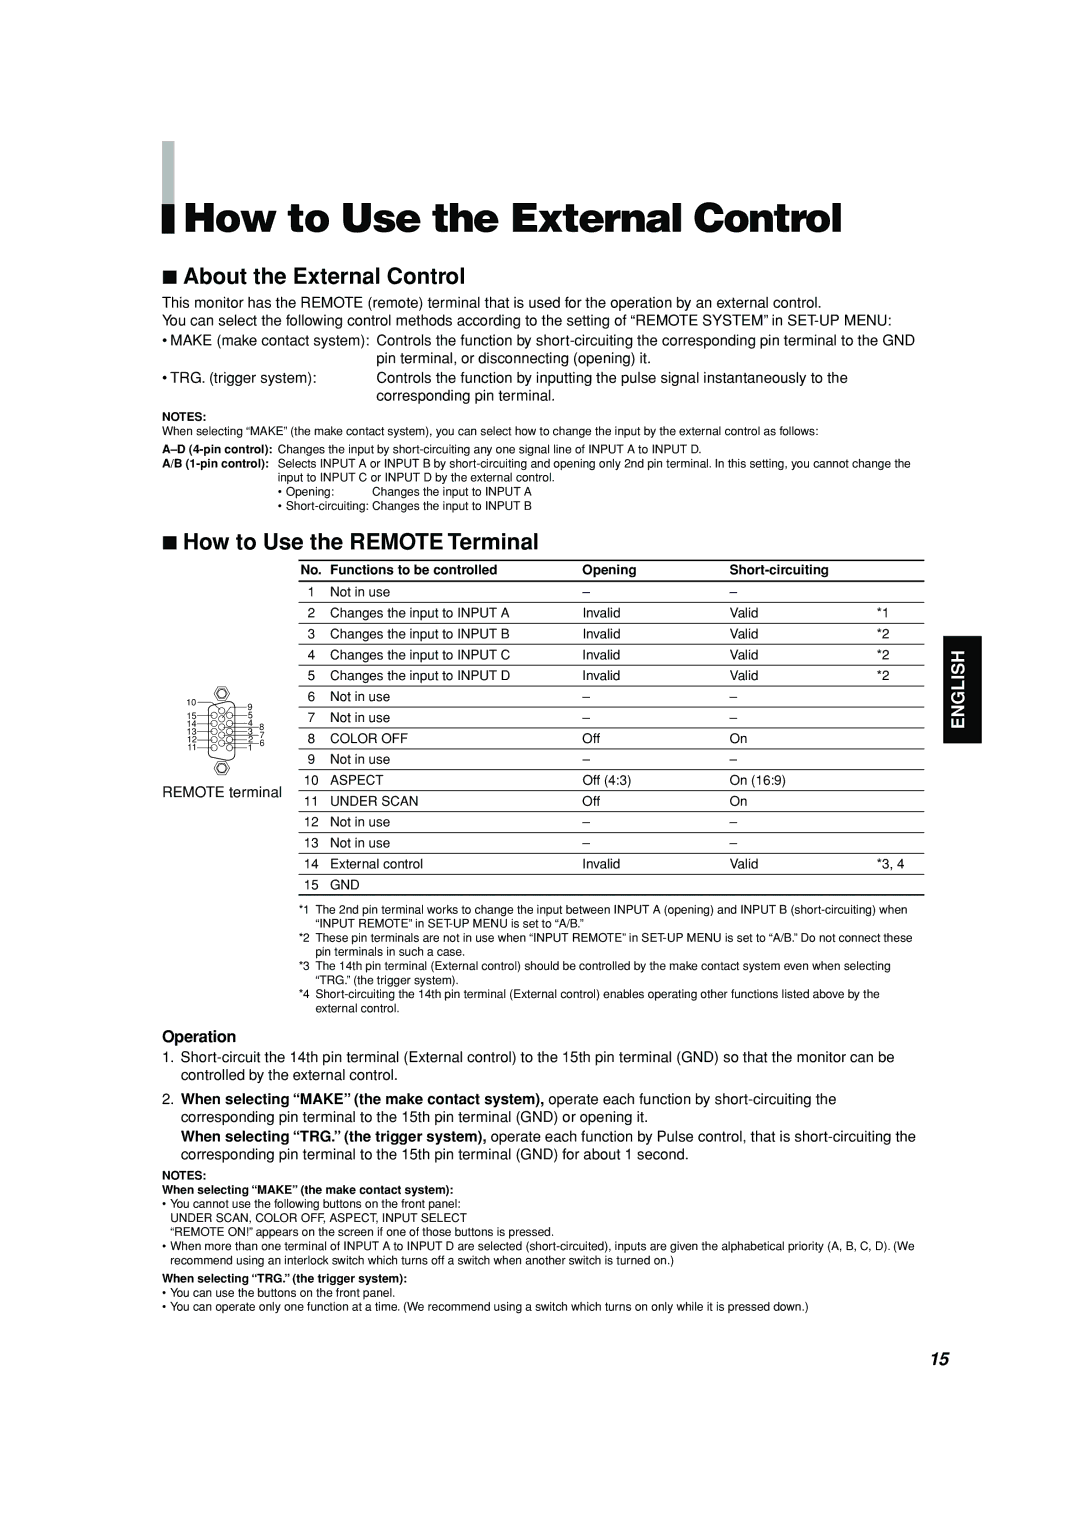 JVC TM-H150CG manual How to Use the External Control, About the External Control, How to Use the Remote Terminal, Operation 